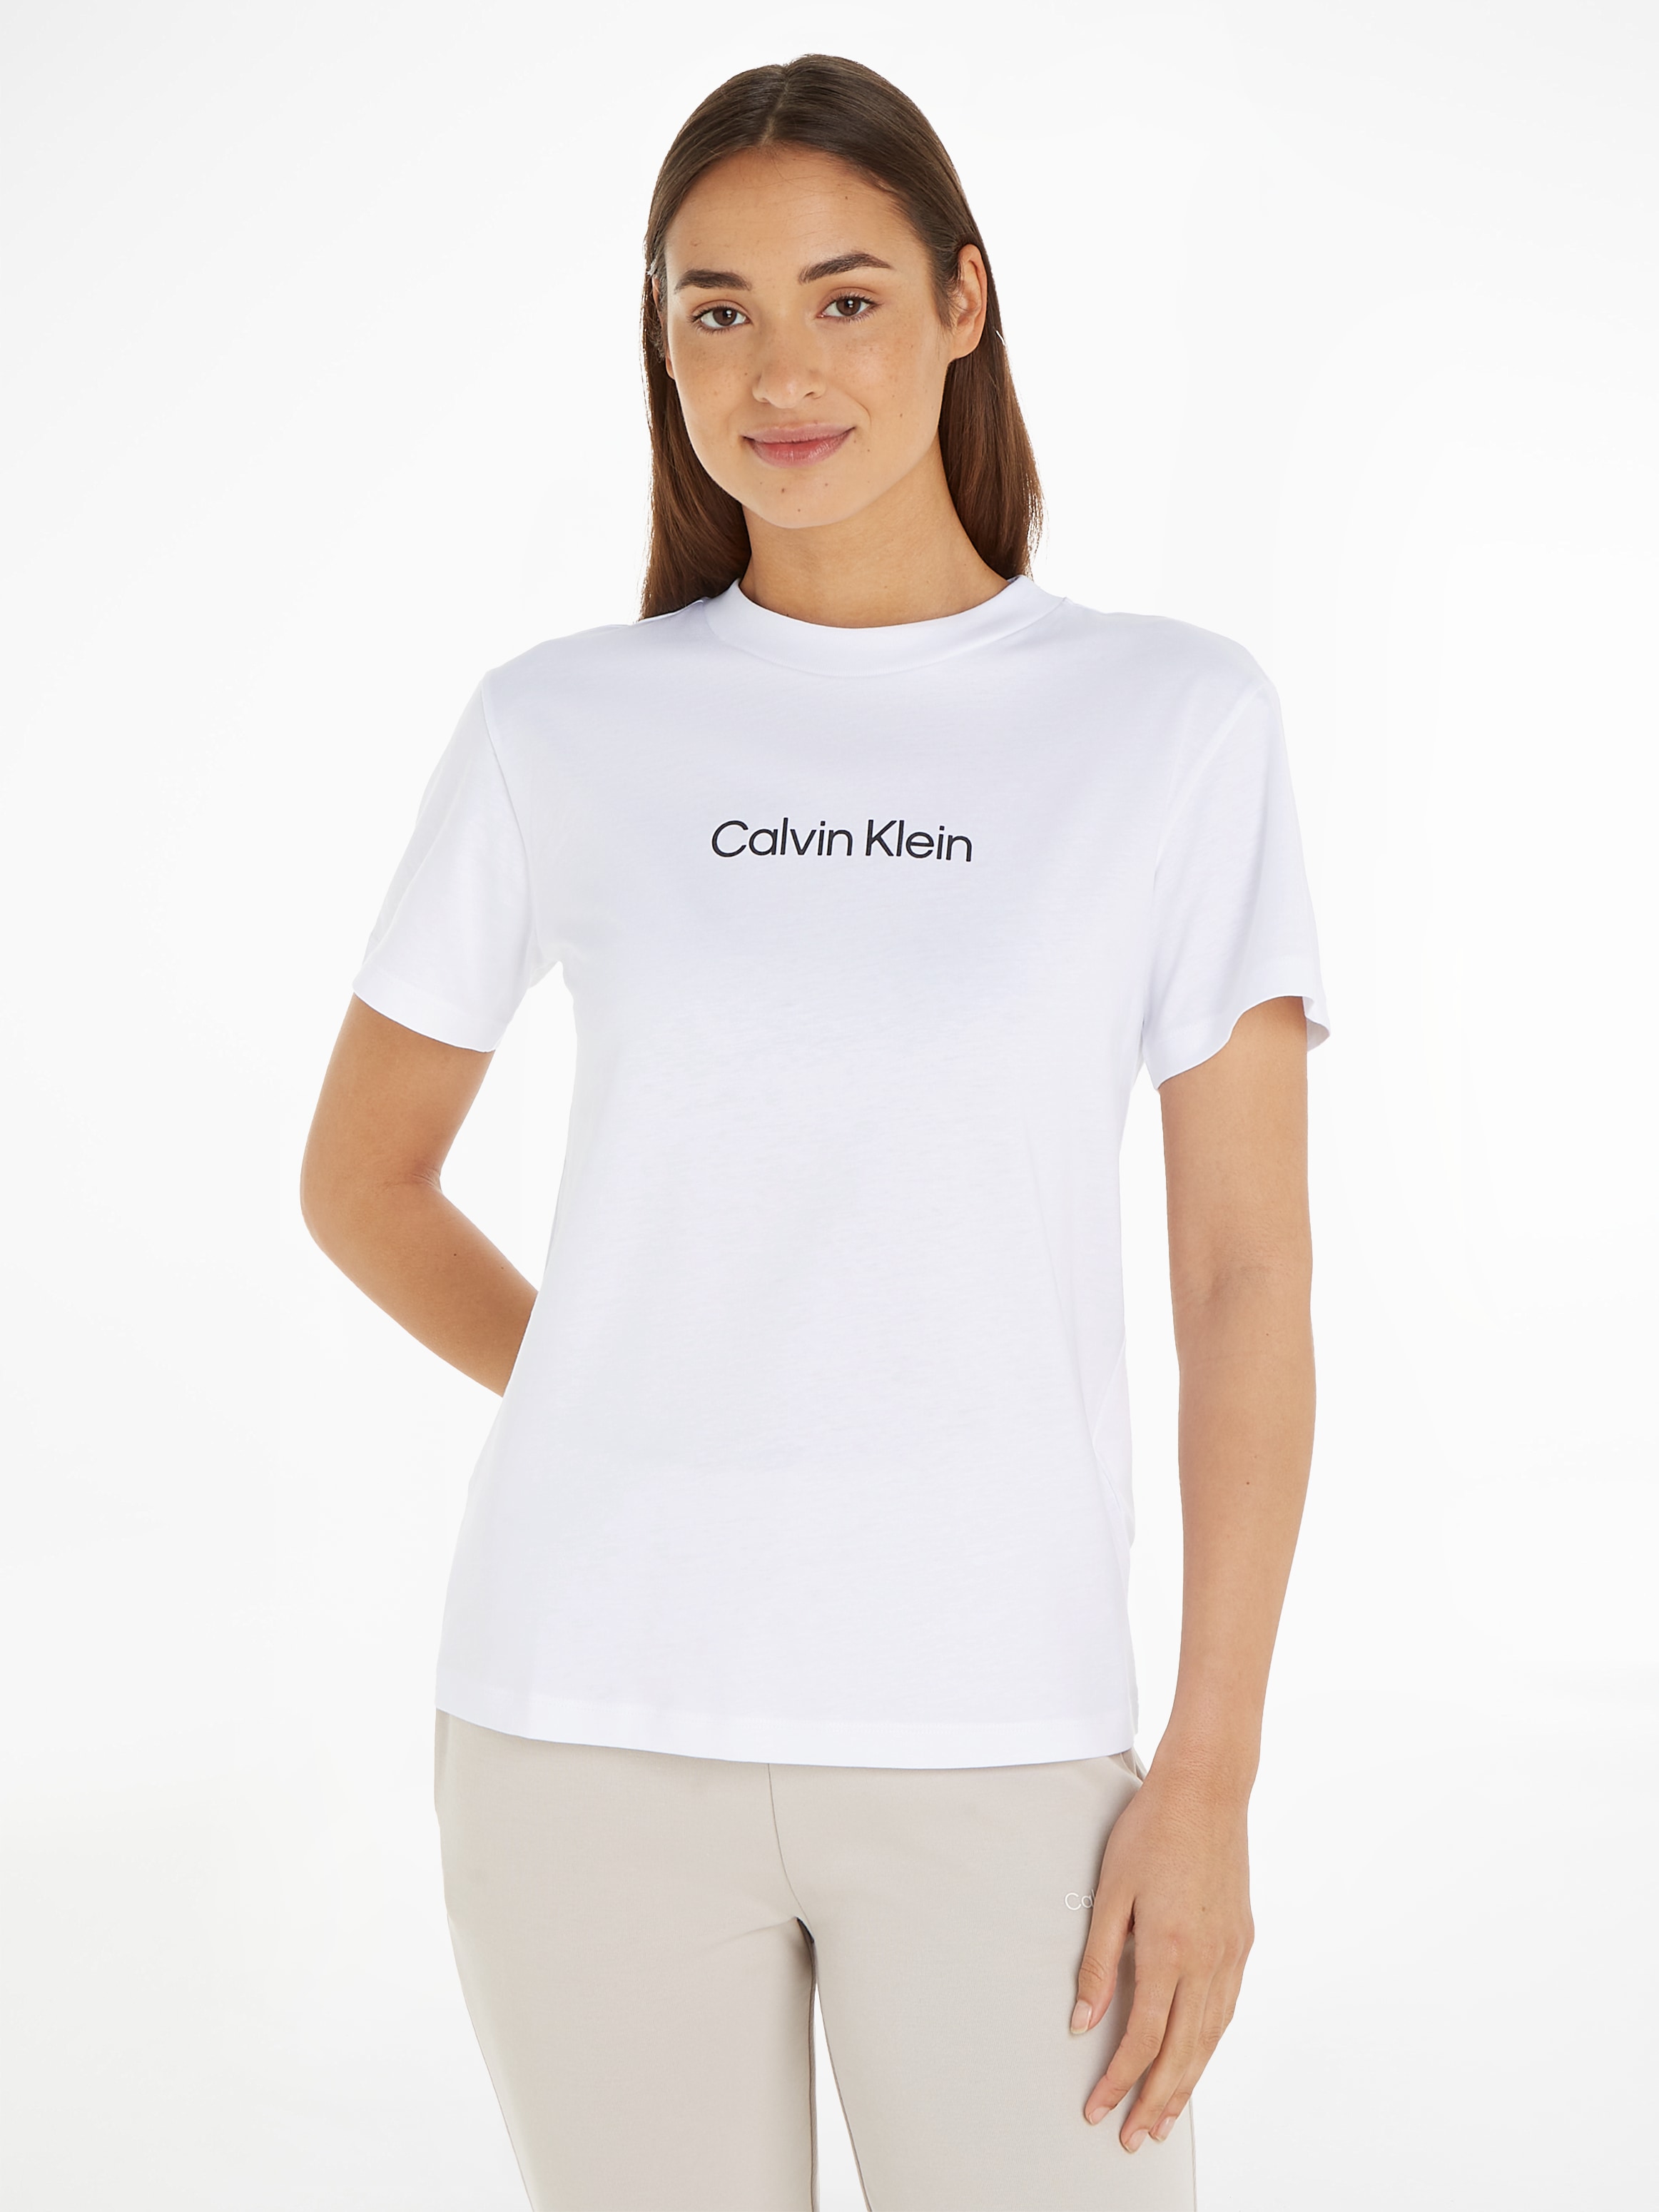 bei HERO REGULAR« Klein OTTO T-Shirt »Shirt kaufen Calvin LOGO